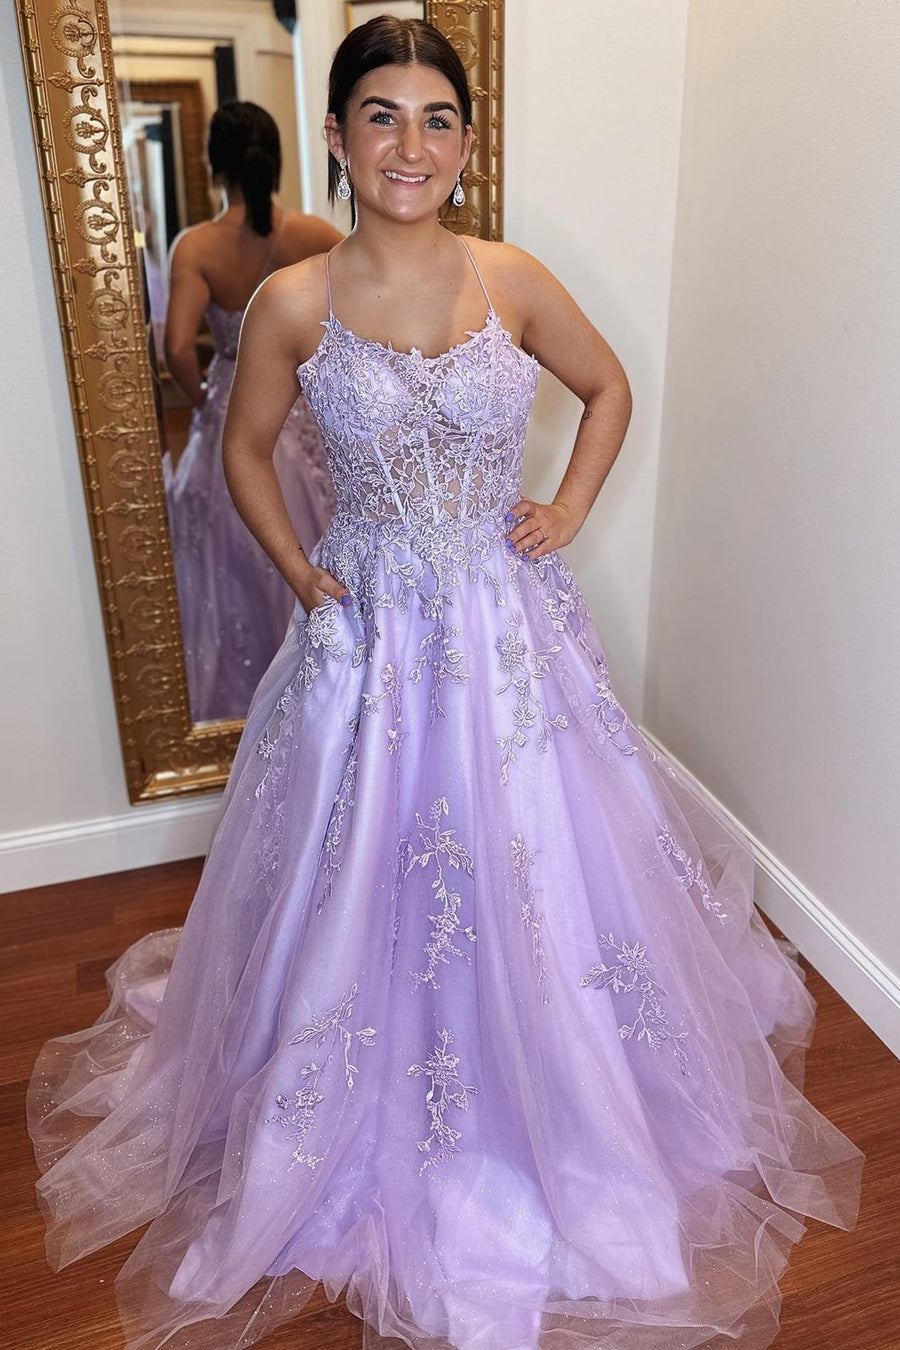 Lavender Tulle Applique Lace-Up Back A-Line Prom Dress